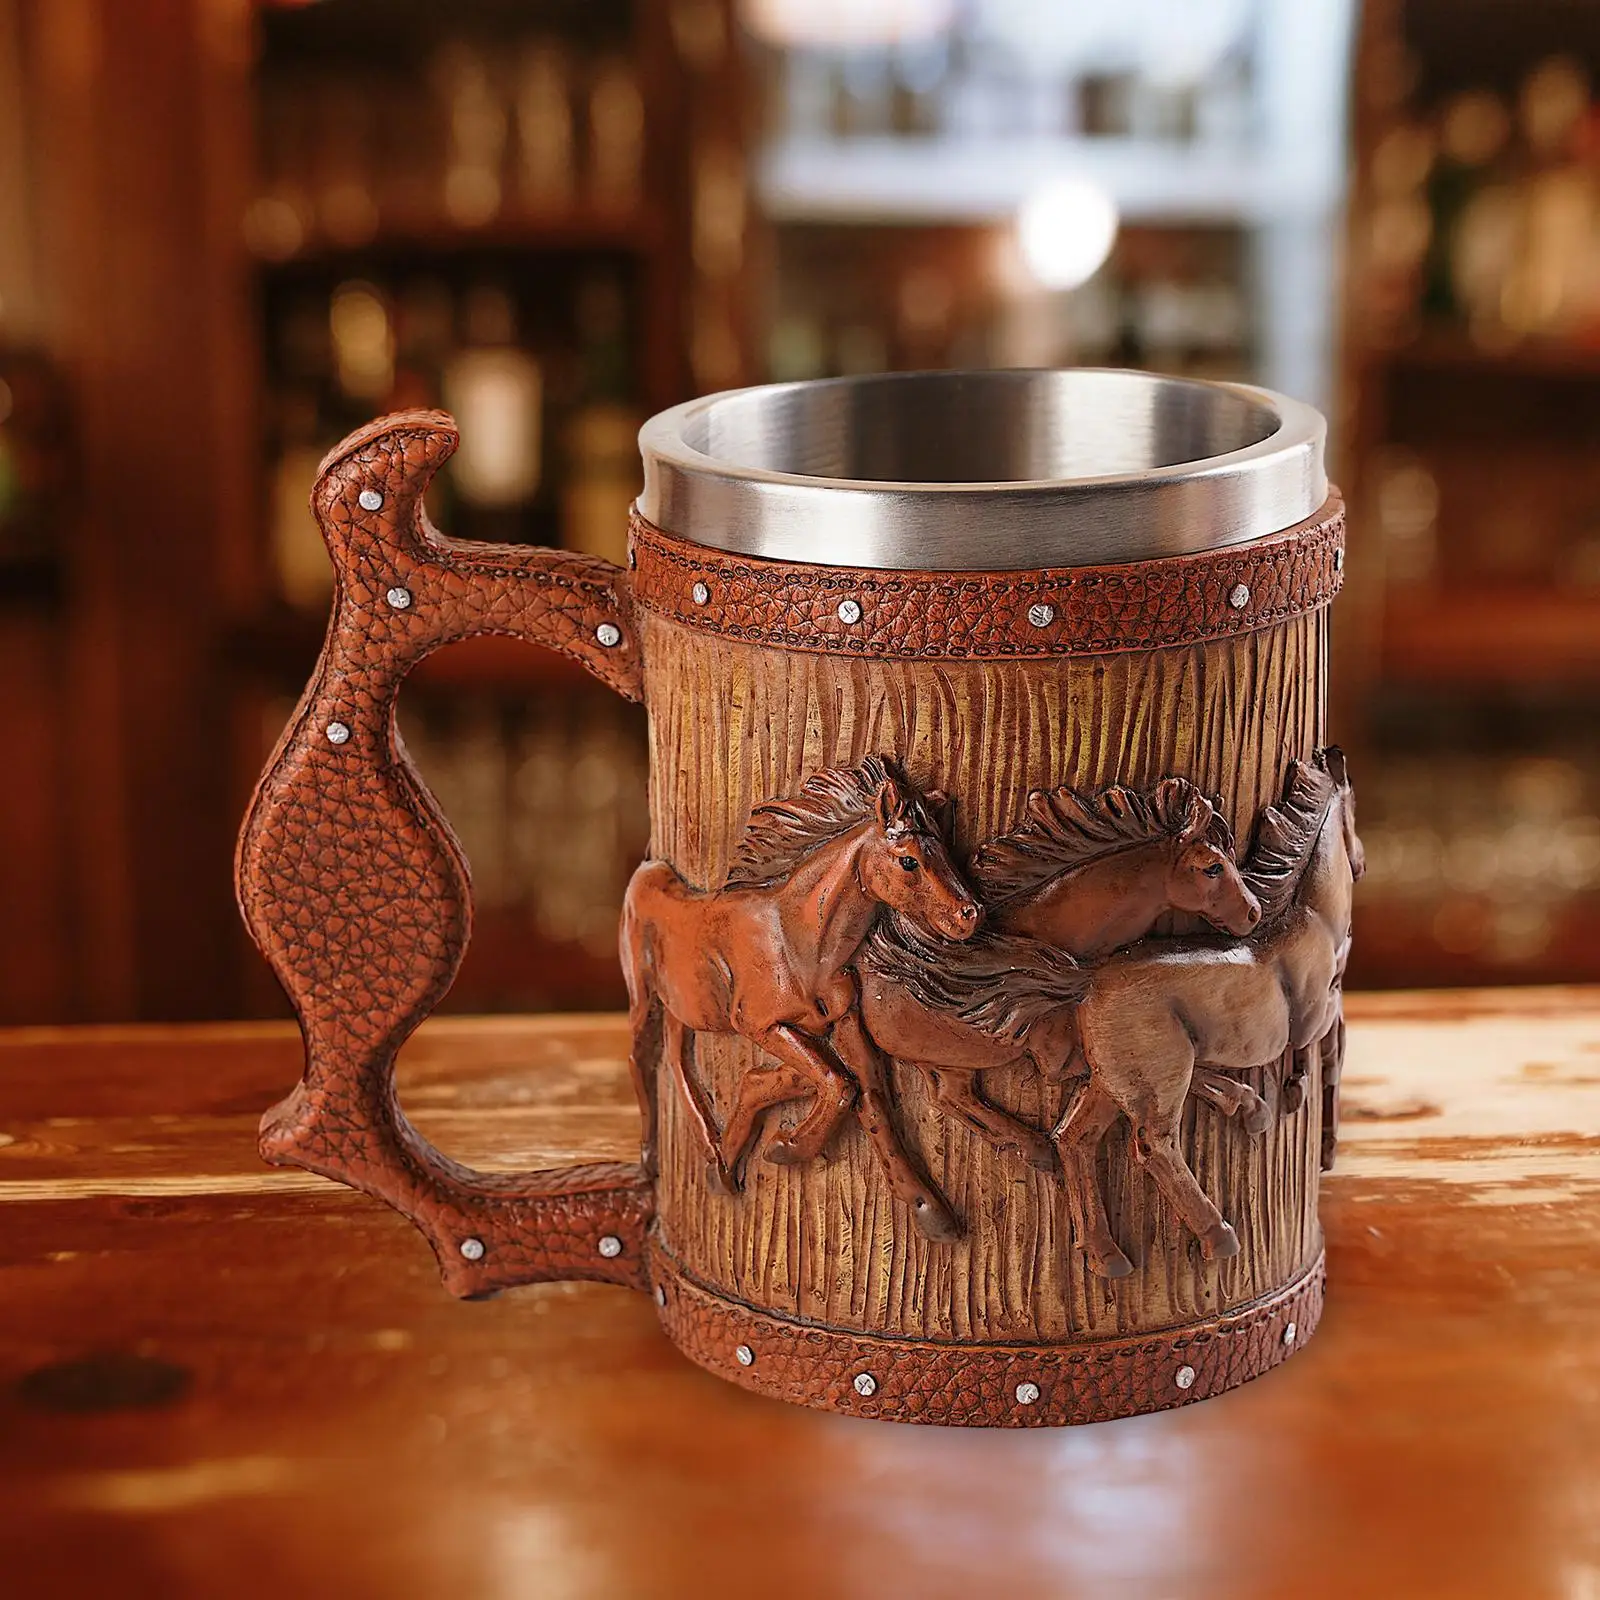 Barrel Beer Mug Resin Home Decor Rustic Handcrafted Bar Accessories Tumbler Mug Drinkware for Juice Milk Bar Restaurant Party